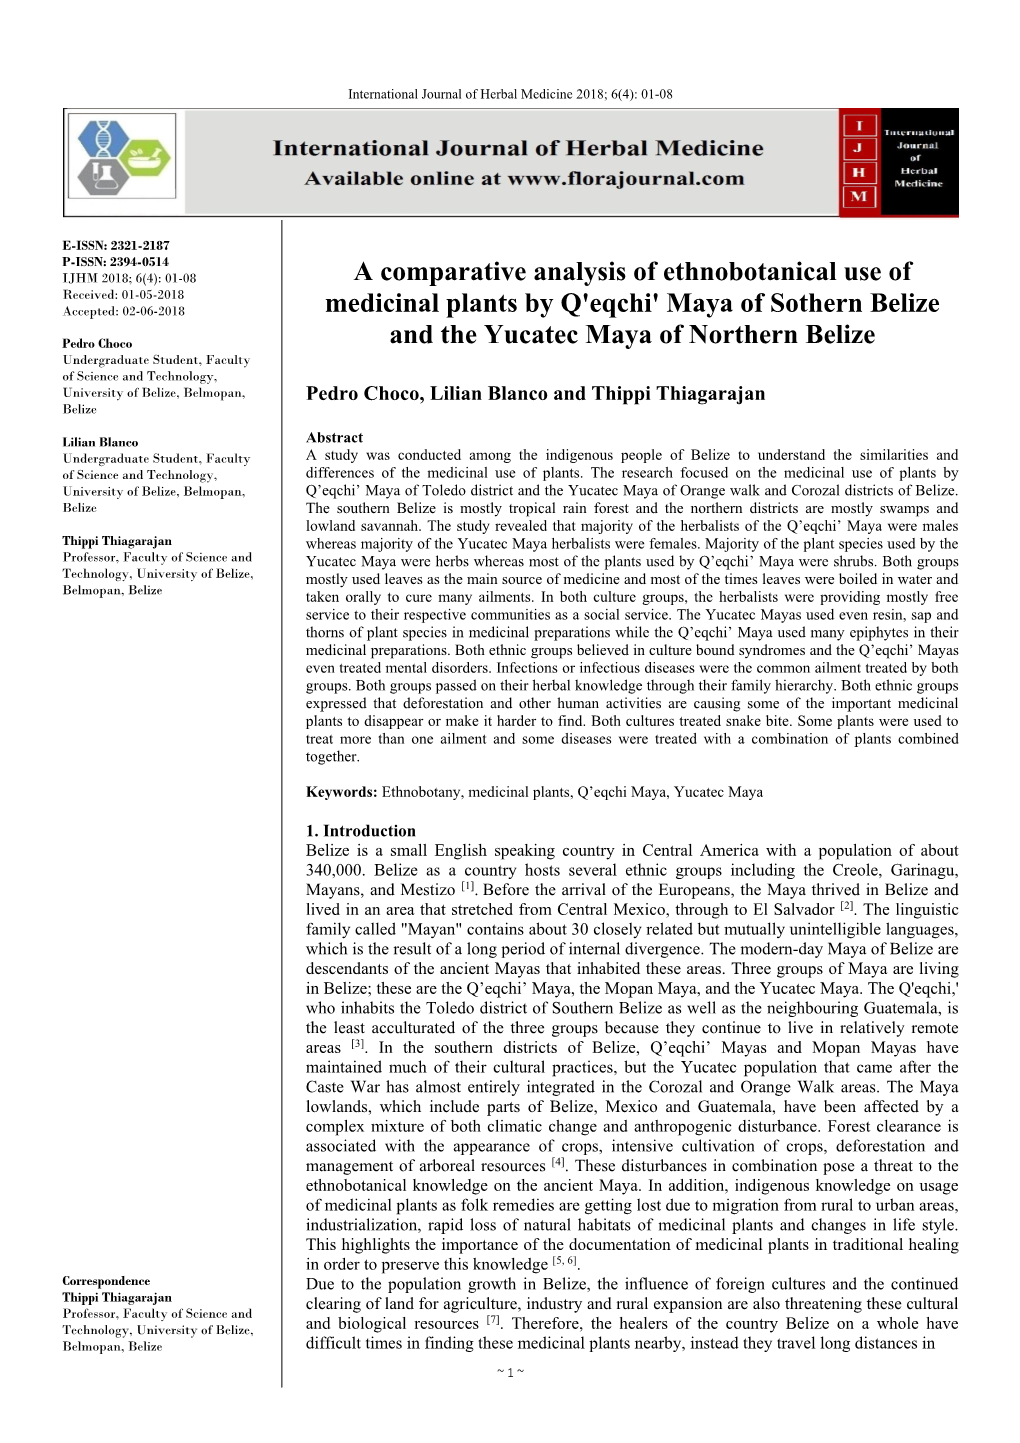 A Comparative Analysis of Ethnobotanical Use of Medicinal